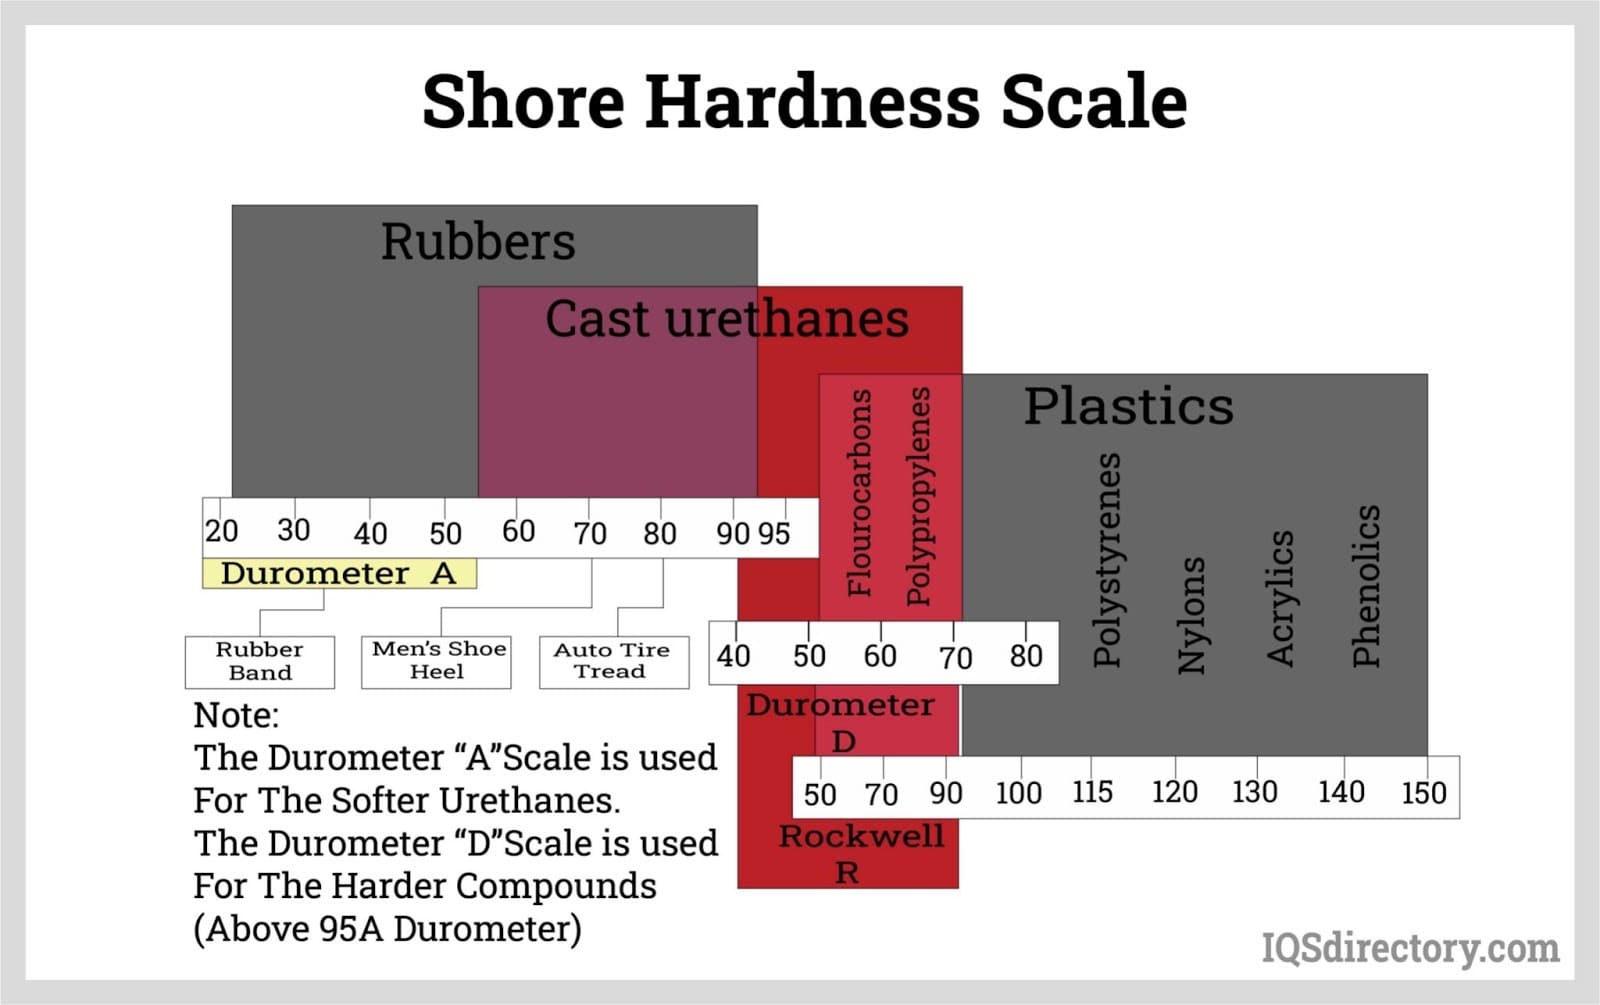 Shore Hardness Scale